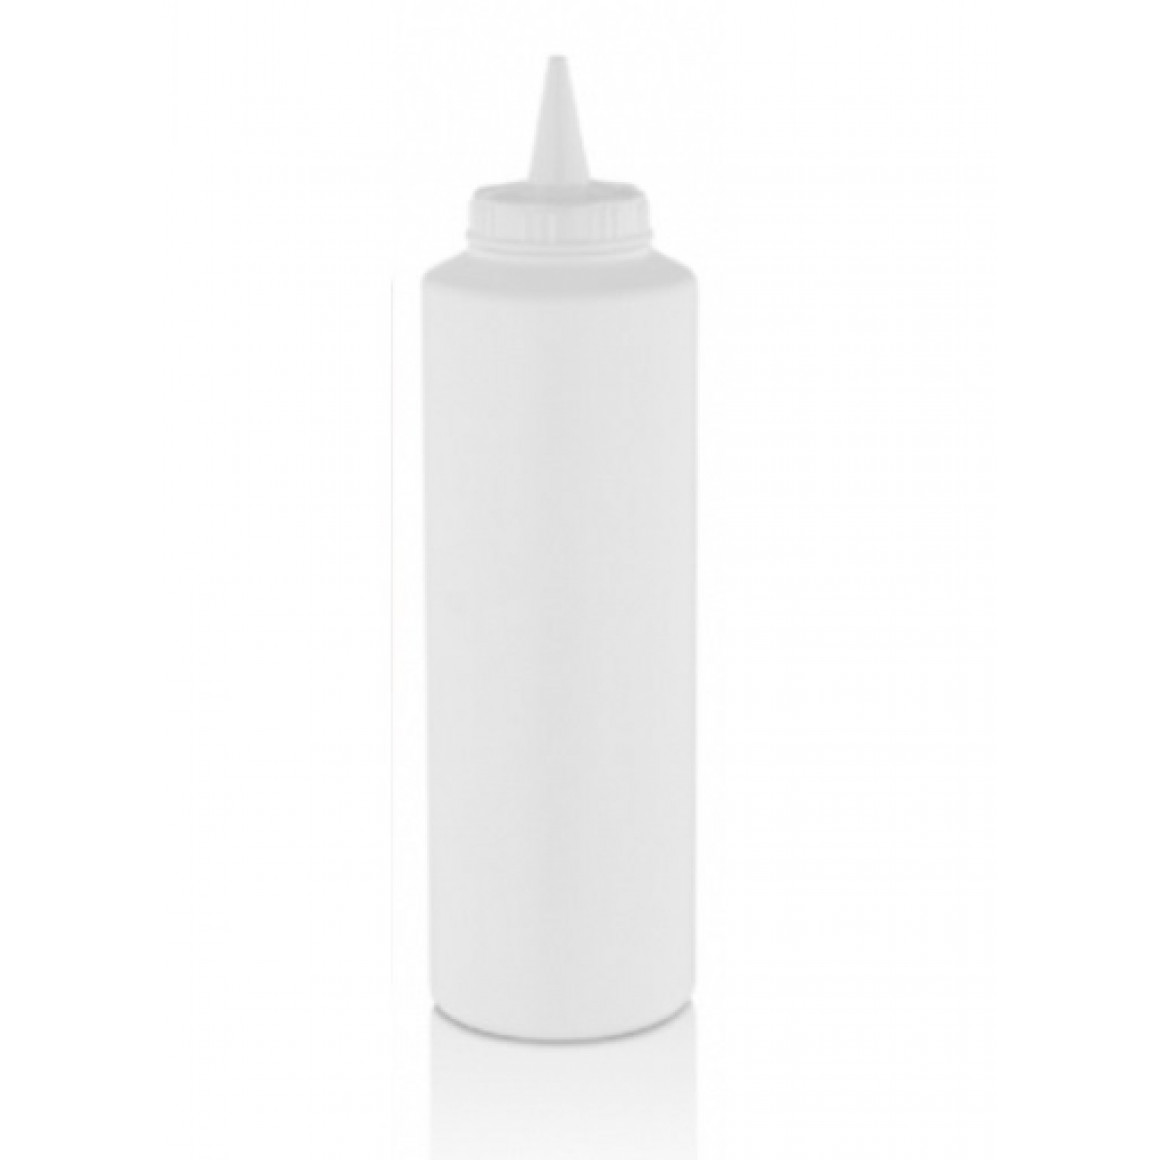 Squeeze bottle dispenser 750 ml White